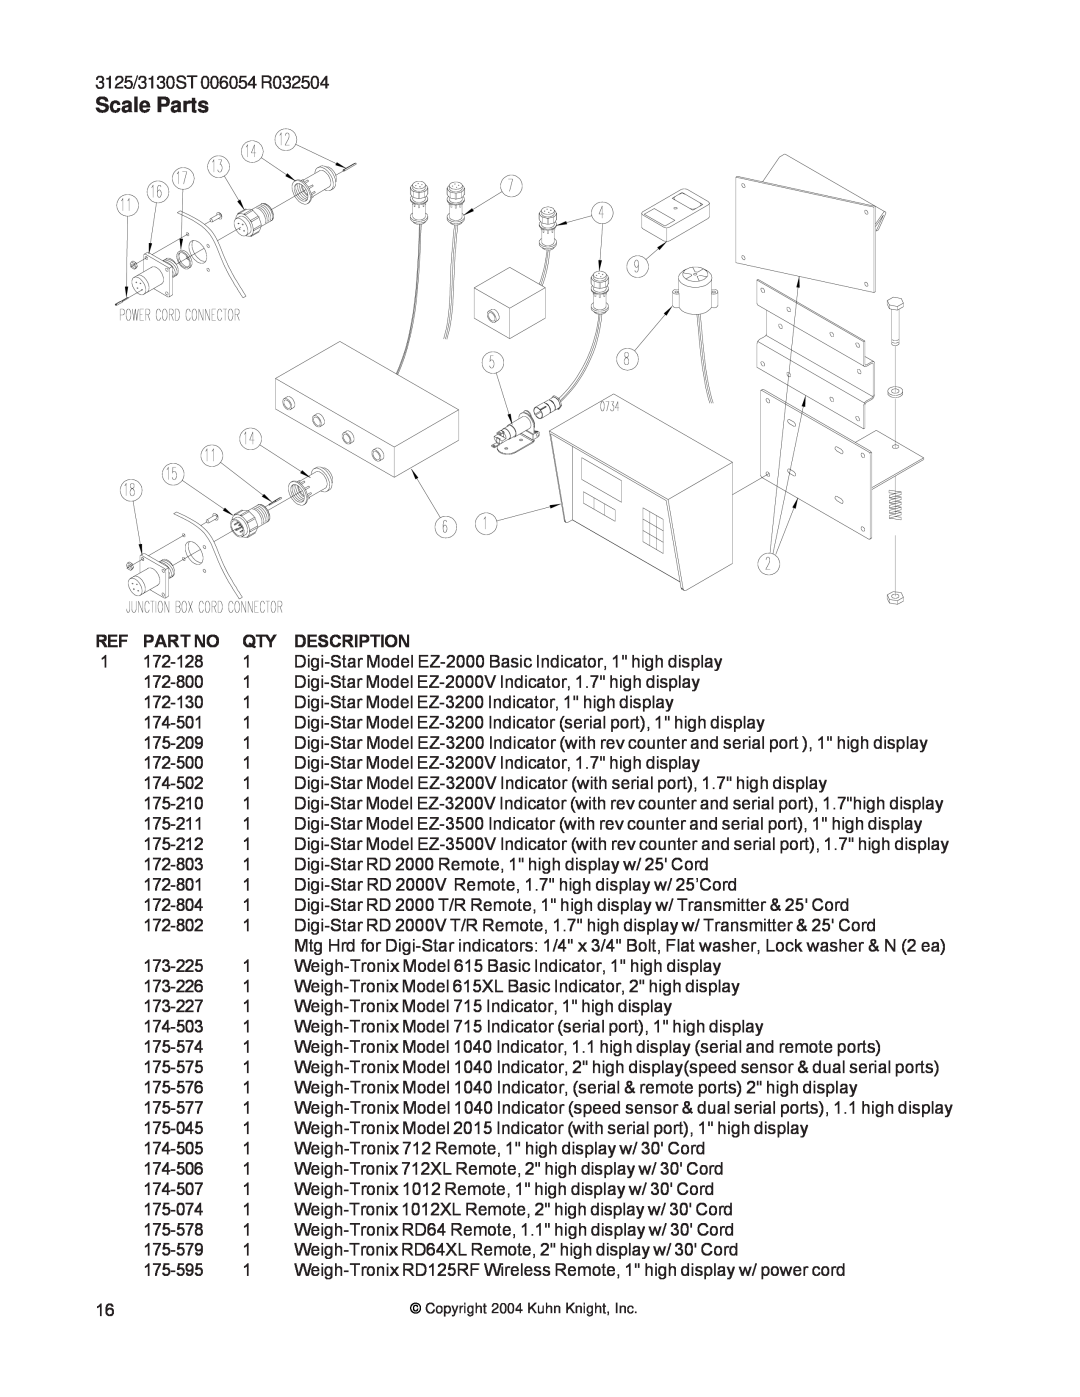 Kuhn Rikon 3130, 3125 instruction manual Scale Parts 